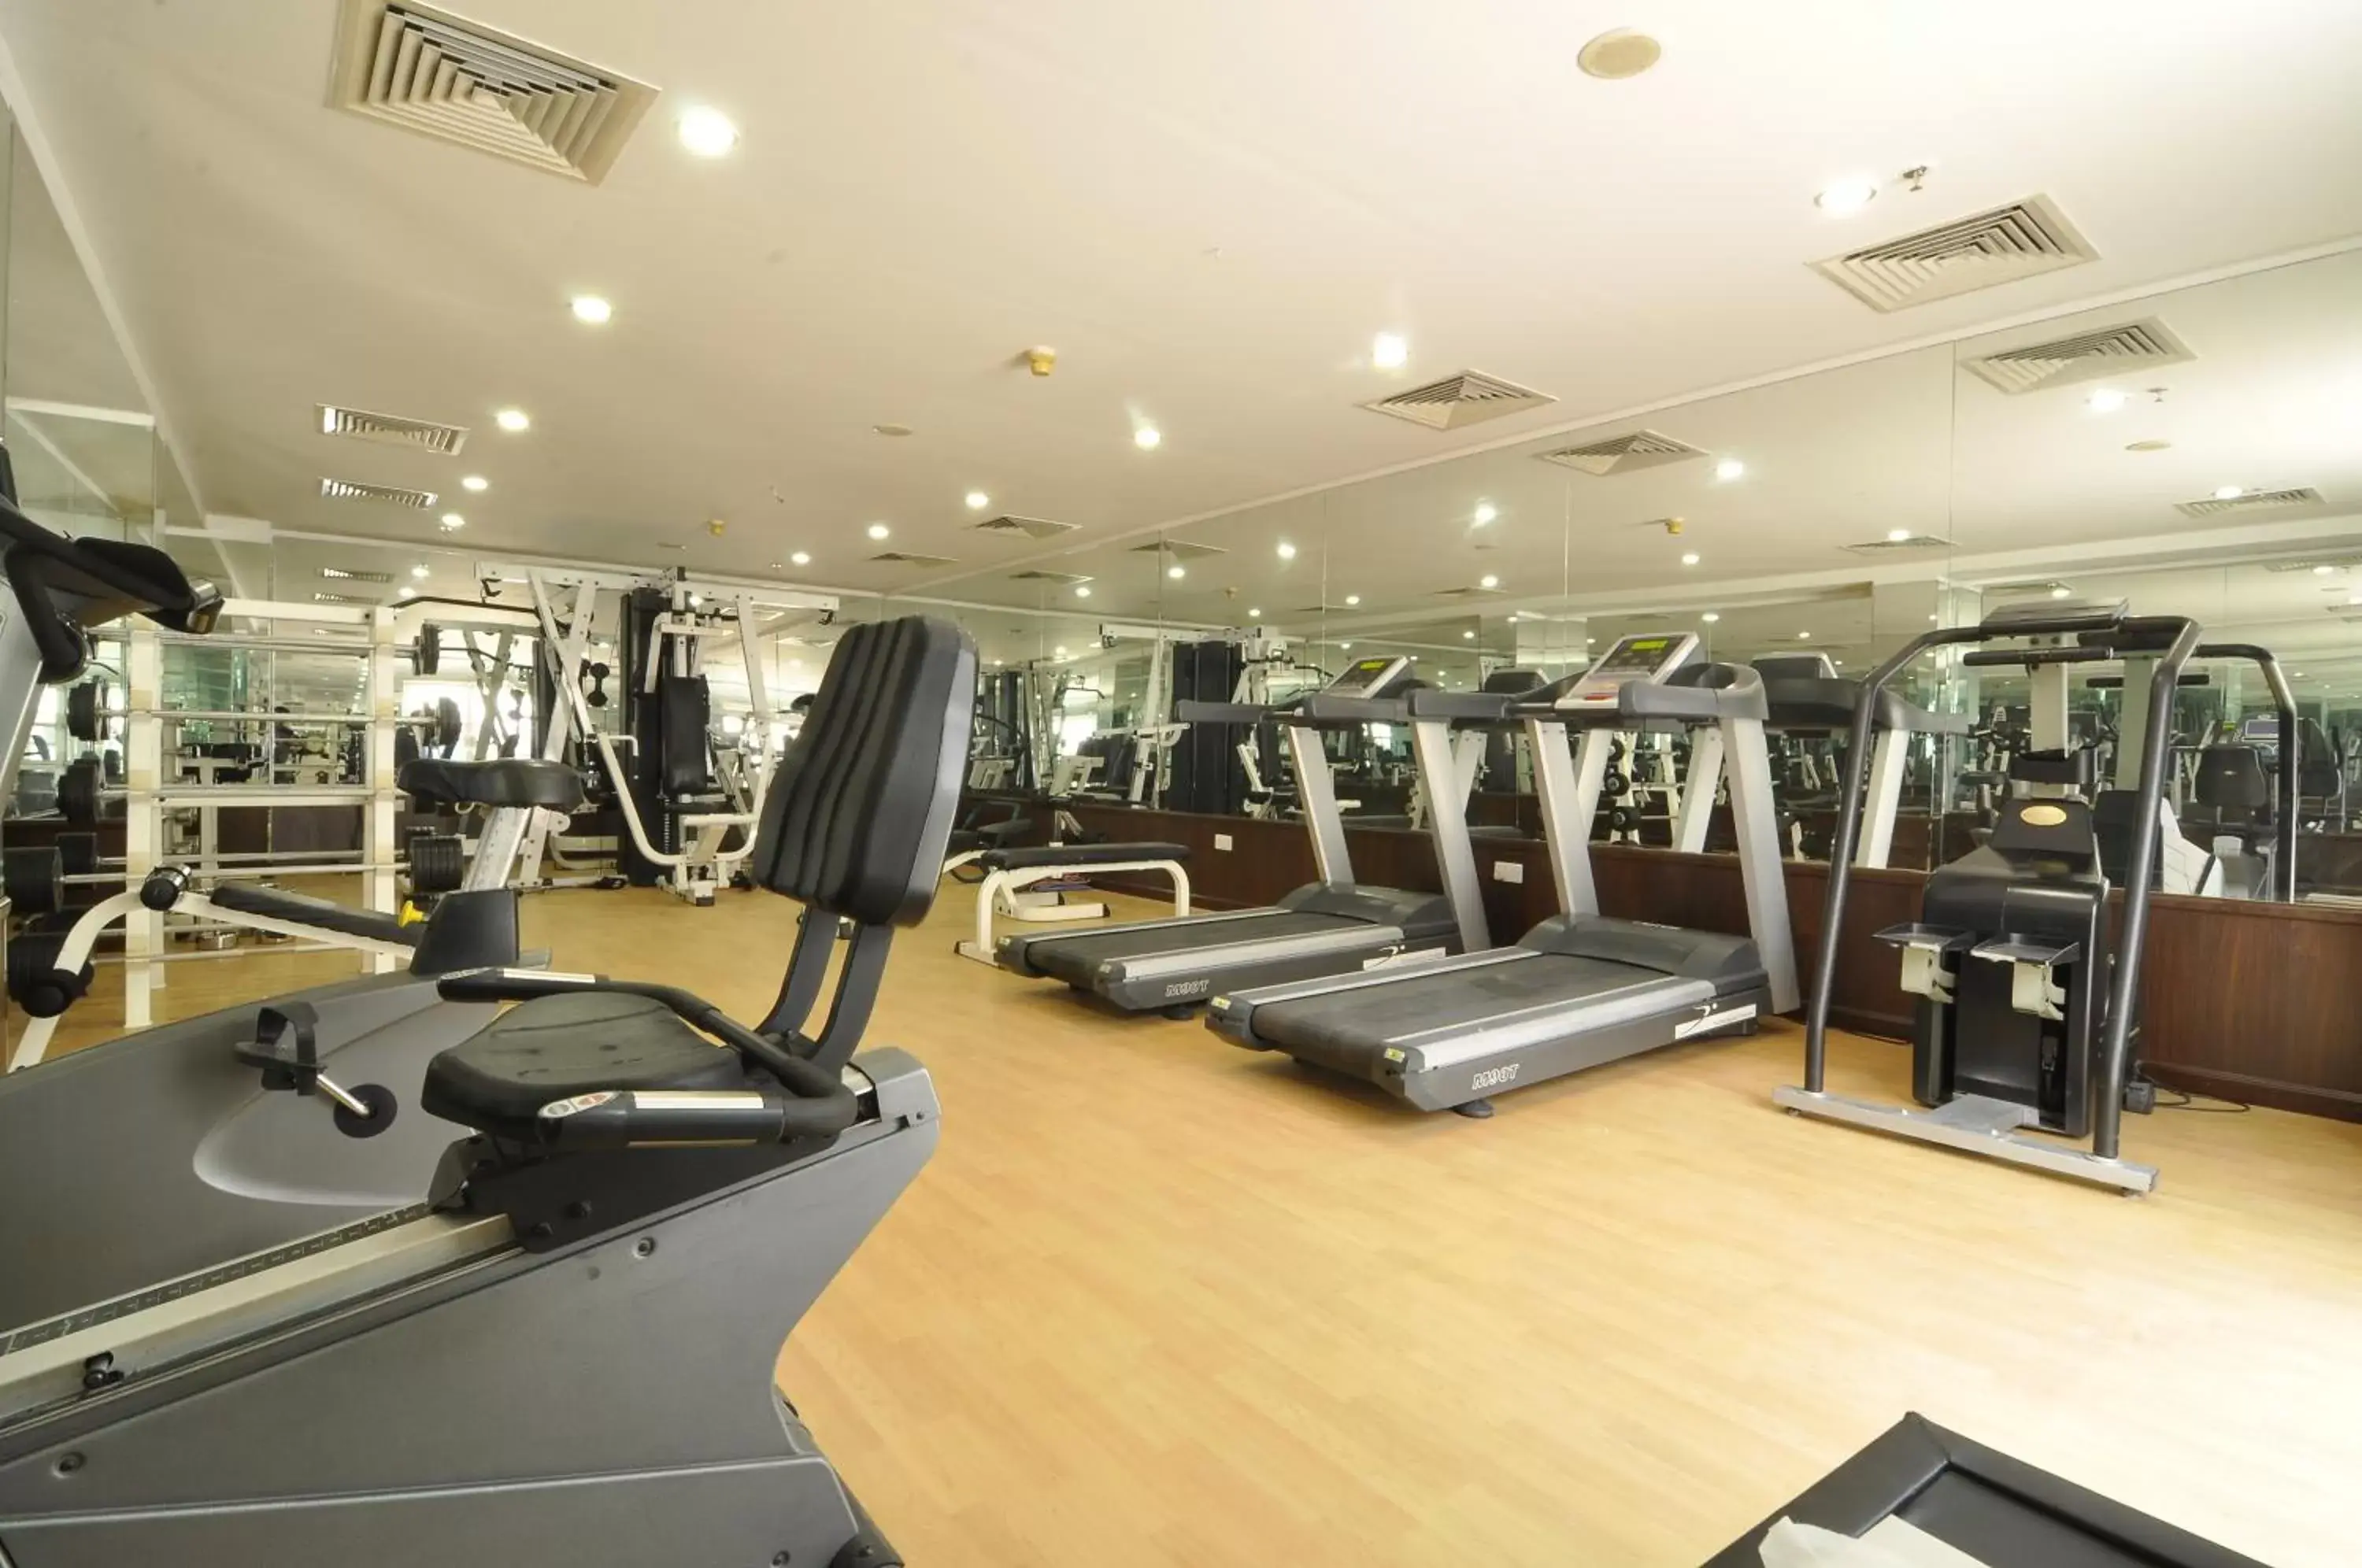 Fitness centre/facilities, Fitness Center/Facilities in Dubai Grand Hotel by Fortune, Dubai Airport